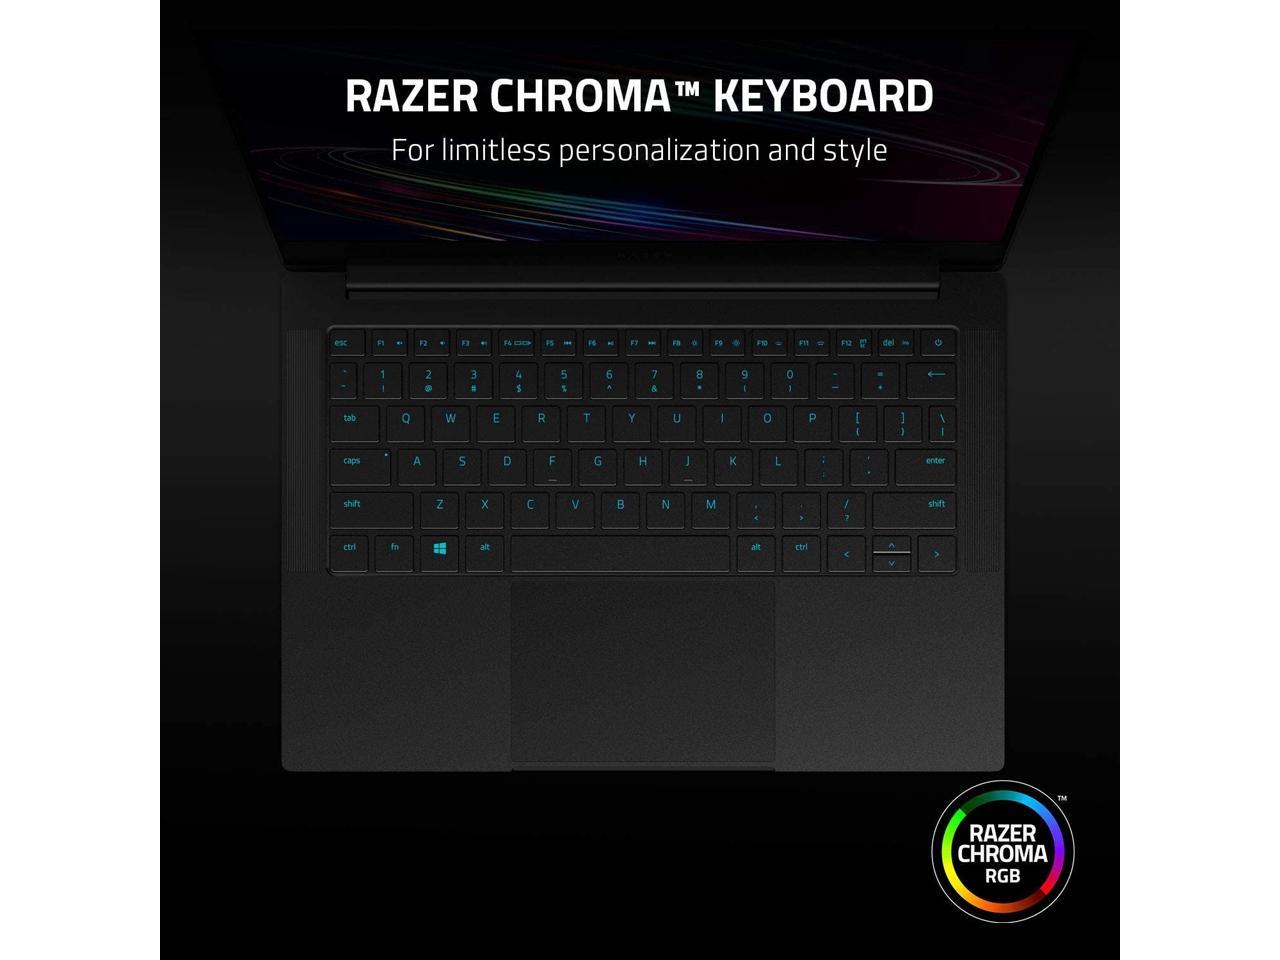 Razer Blade Stealth 13 Ultrabook Gaming Laptop: Intel Core i7-1065G7 4 Core, NVIDIA GeForce GTX 1650 Ti Max-Q, 13.3" 1080p 60Hz, 16GB RAM, 512GB SSD, CNC Aluminum, Chroma RGB, Thunderbolt 3, Black